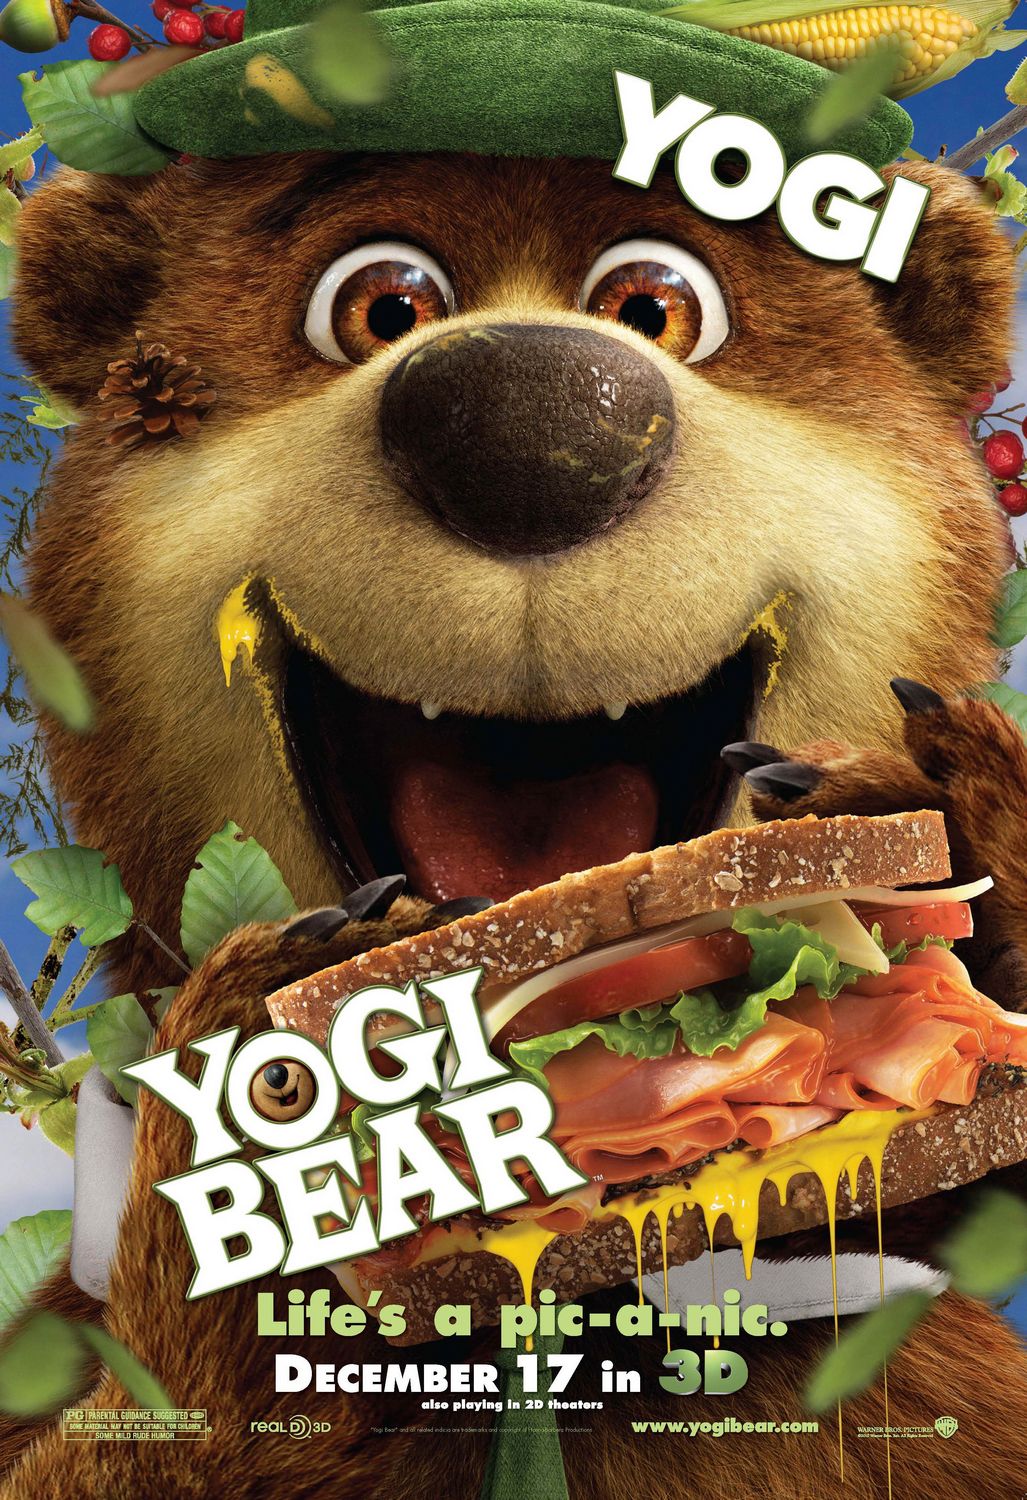 Extra Large Movie Poster Image for Yogi Bear (#6 of 12)